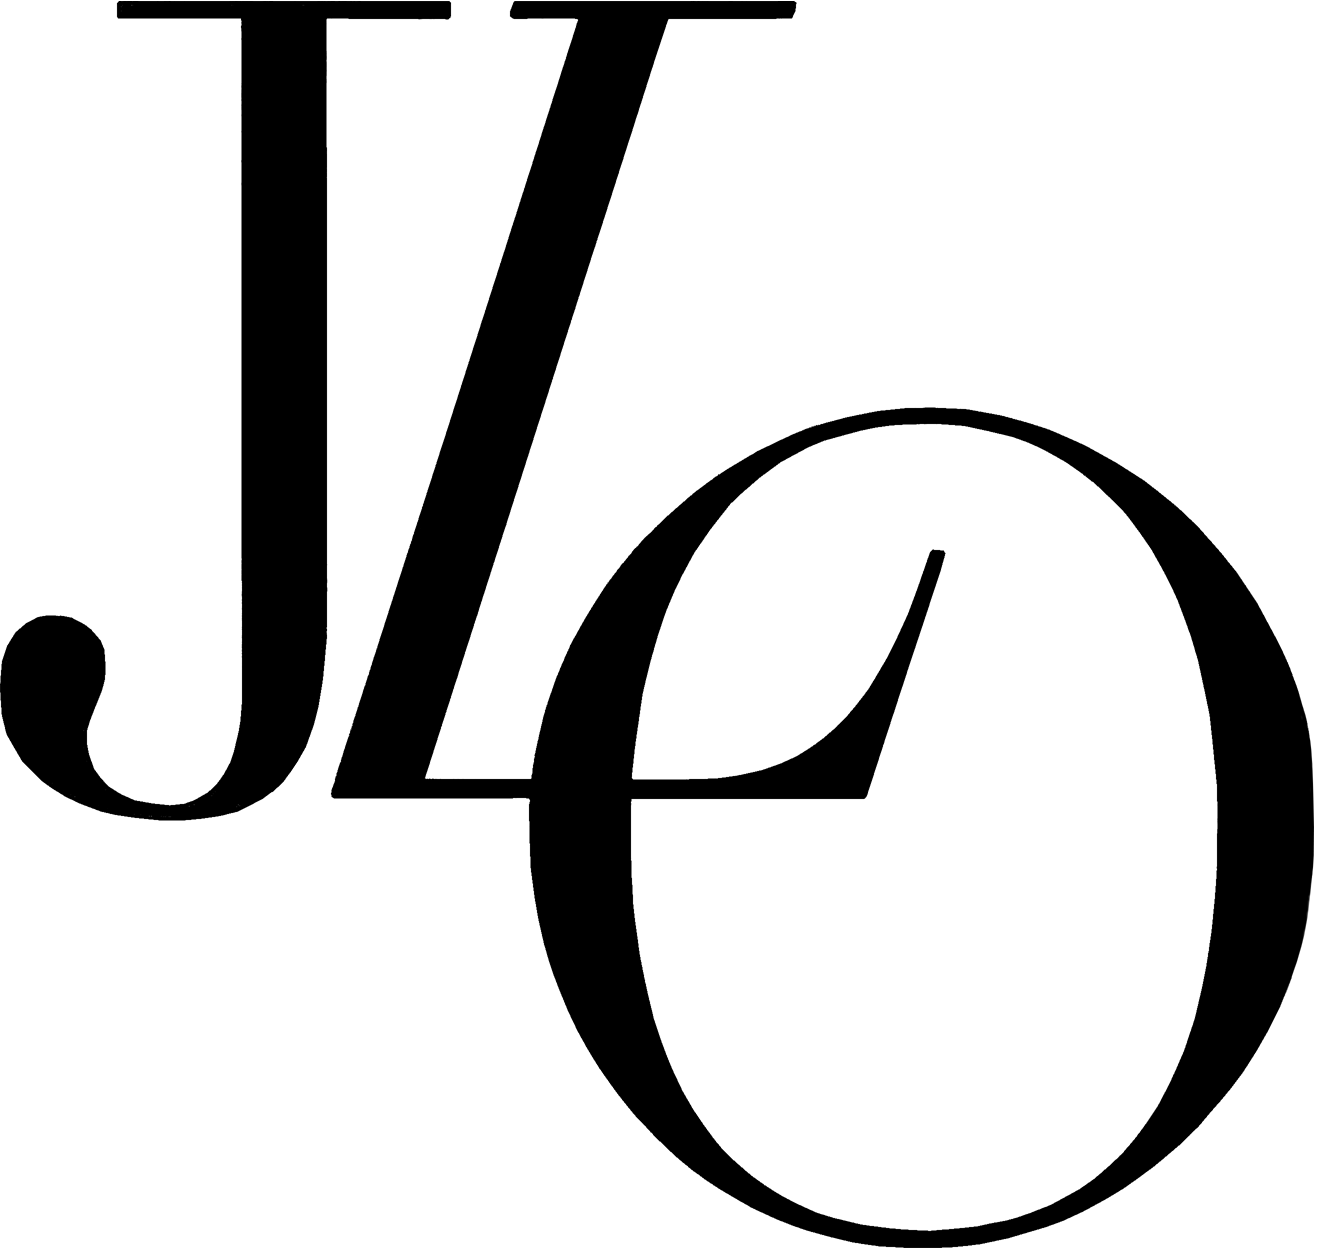 J.Lo Logo - File:JLo 2012.png - Wikimedia Commons